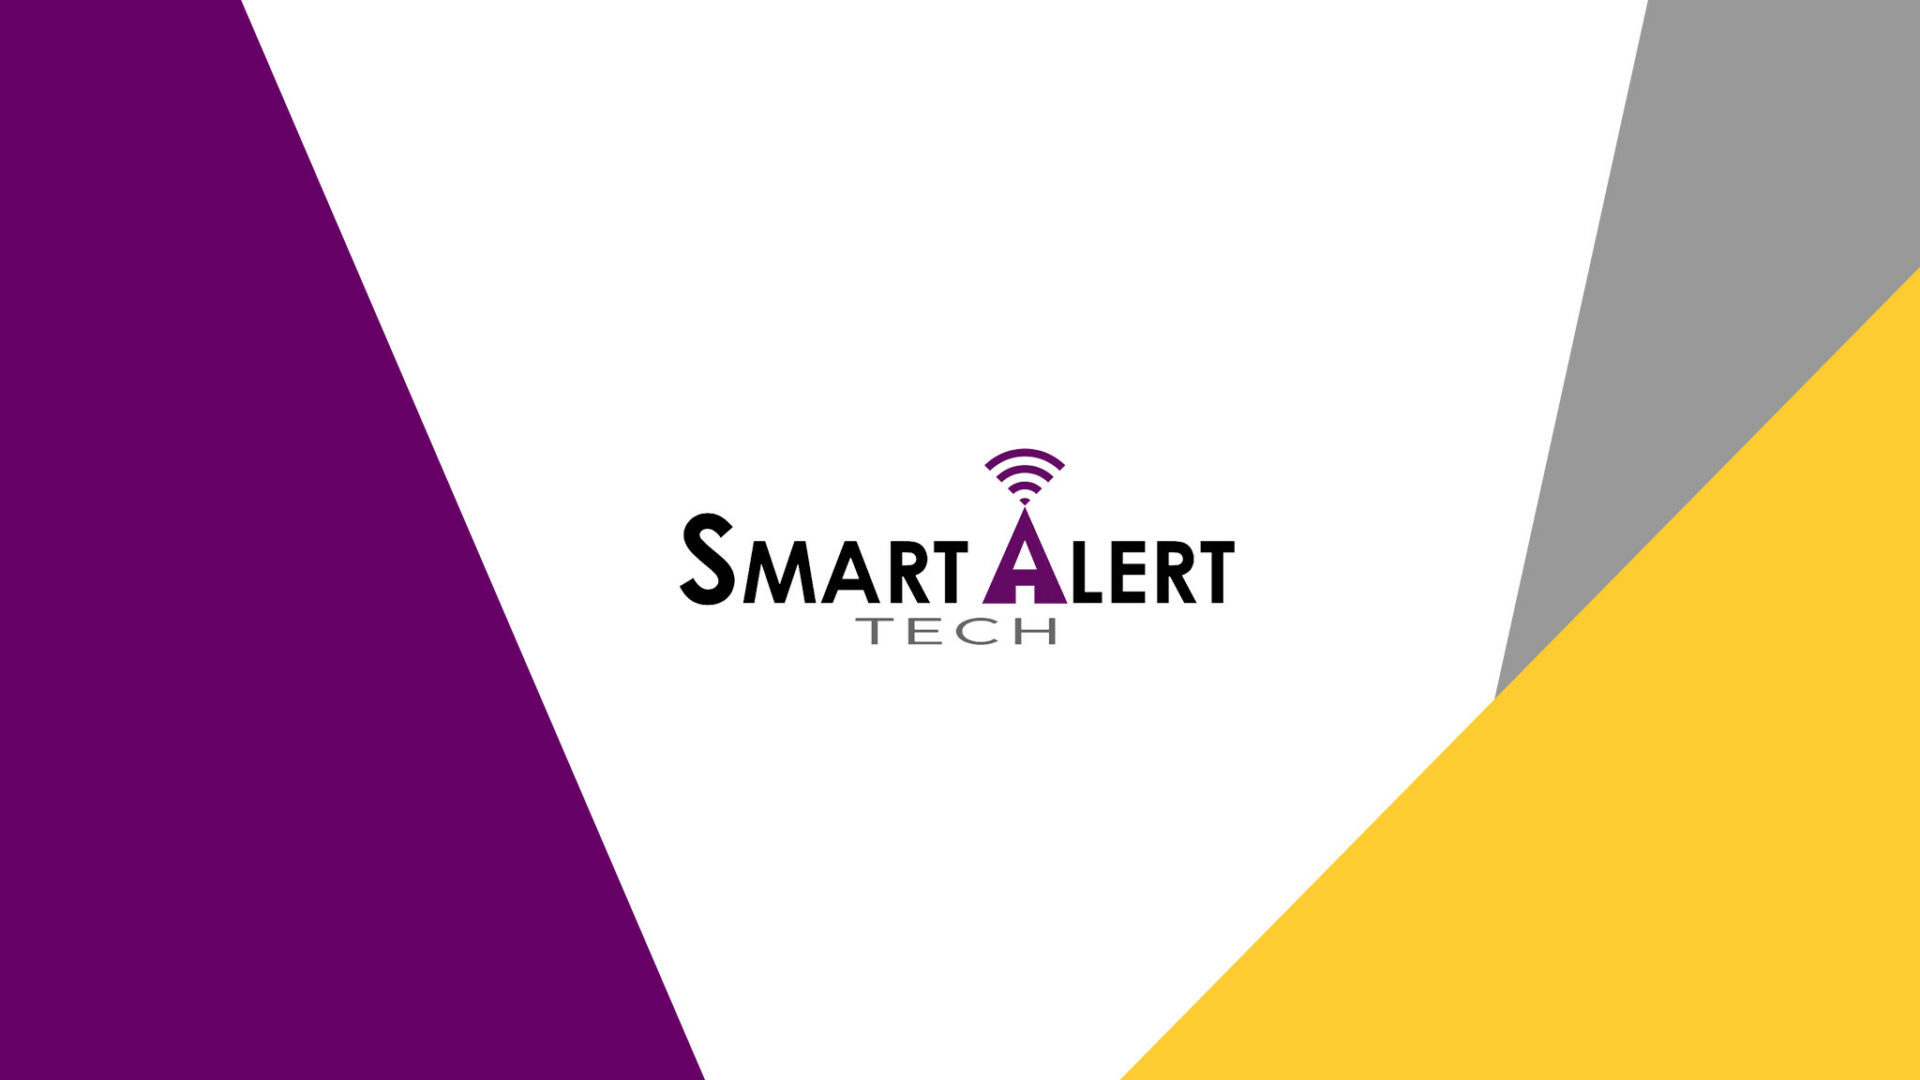 Smart Alert Tech for elderly accessibility